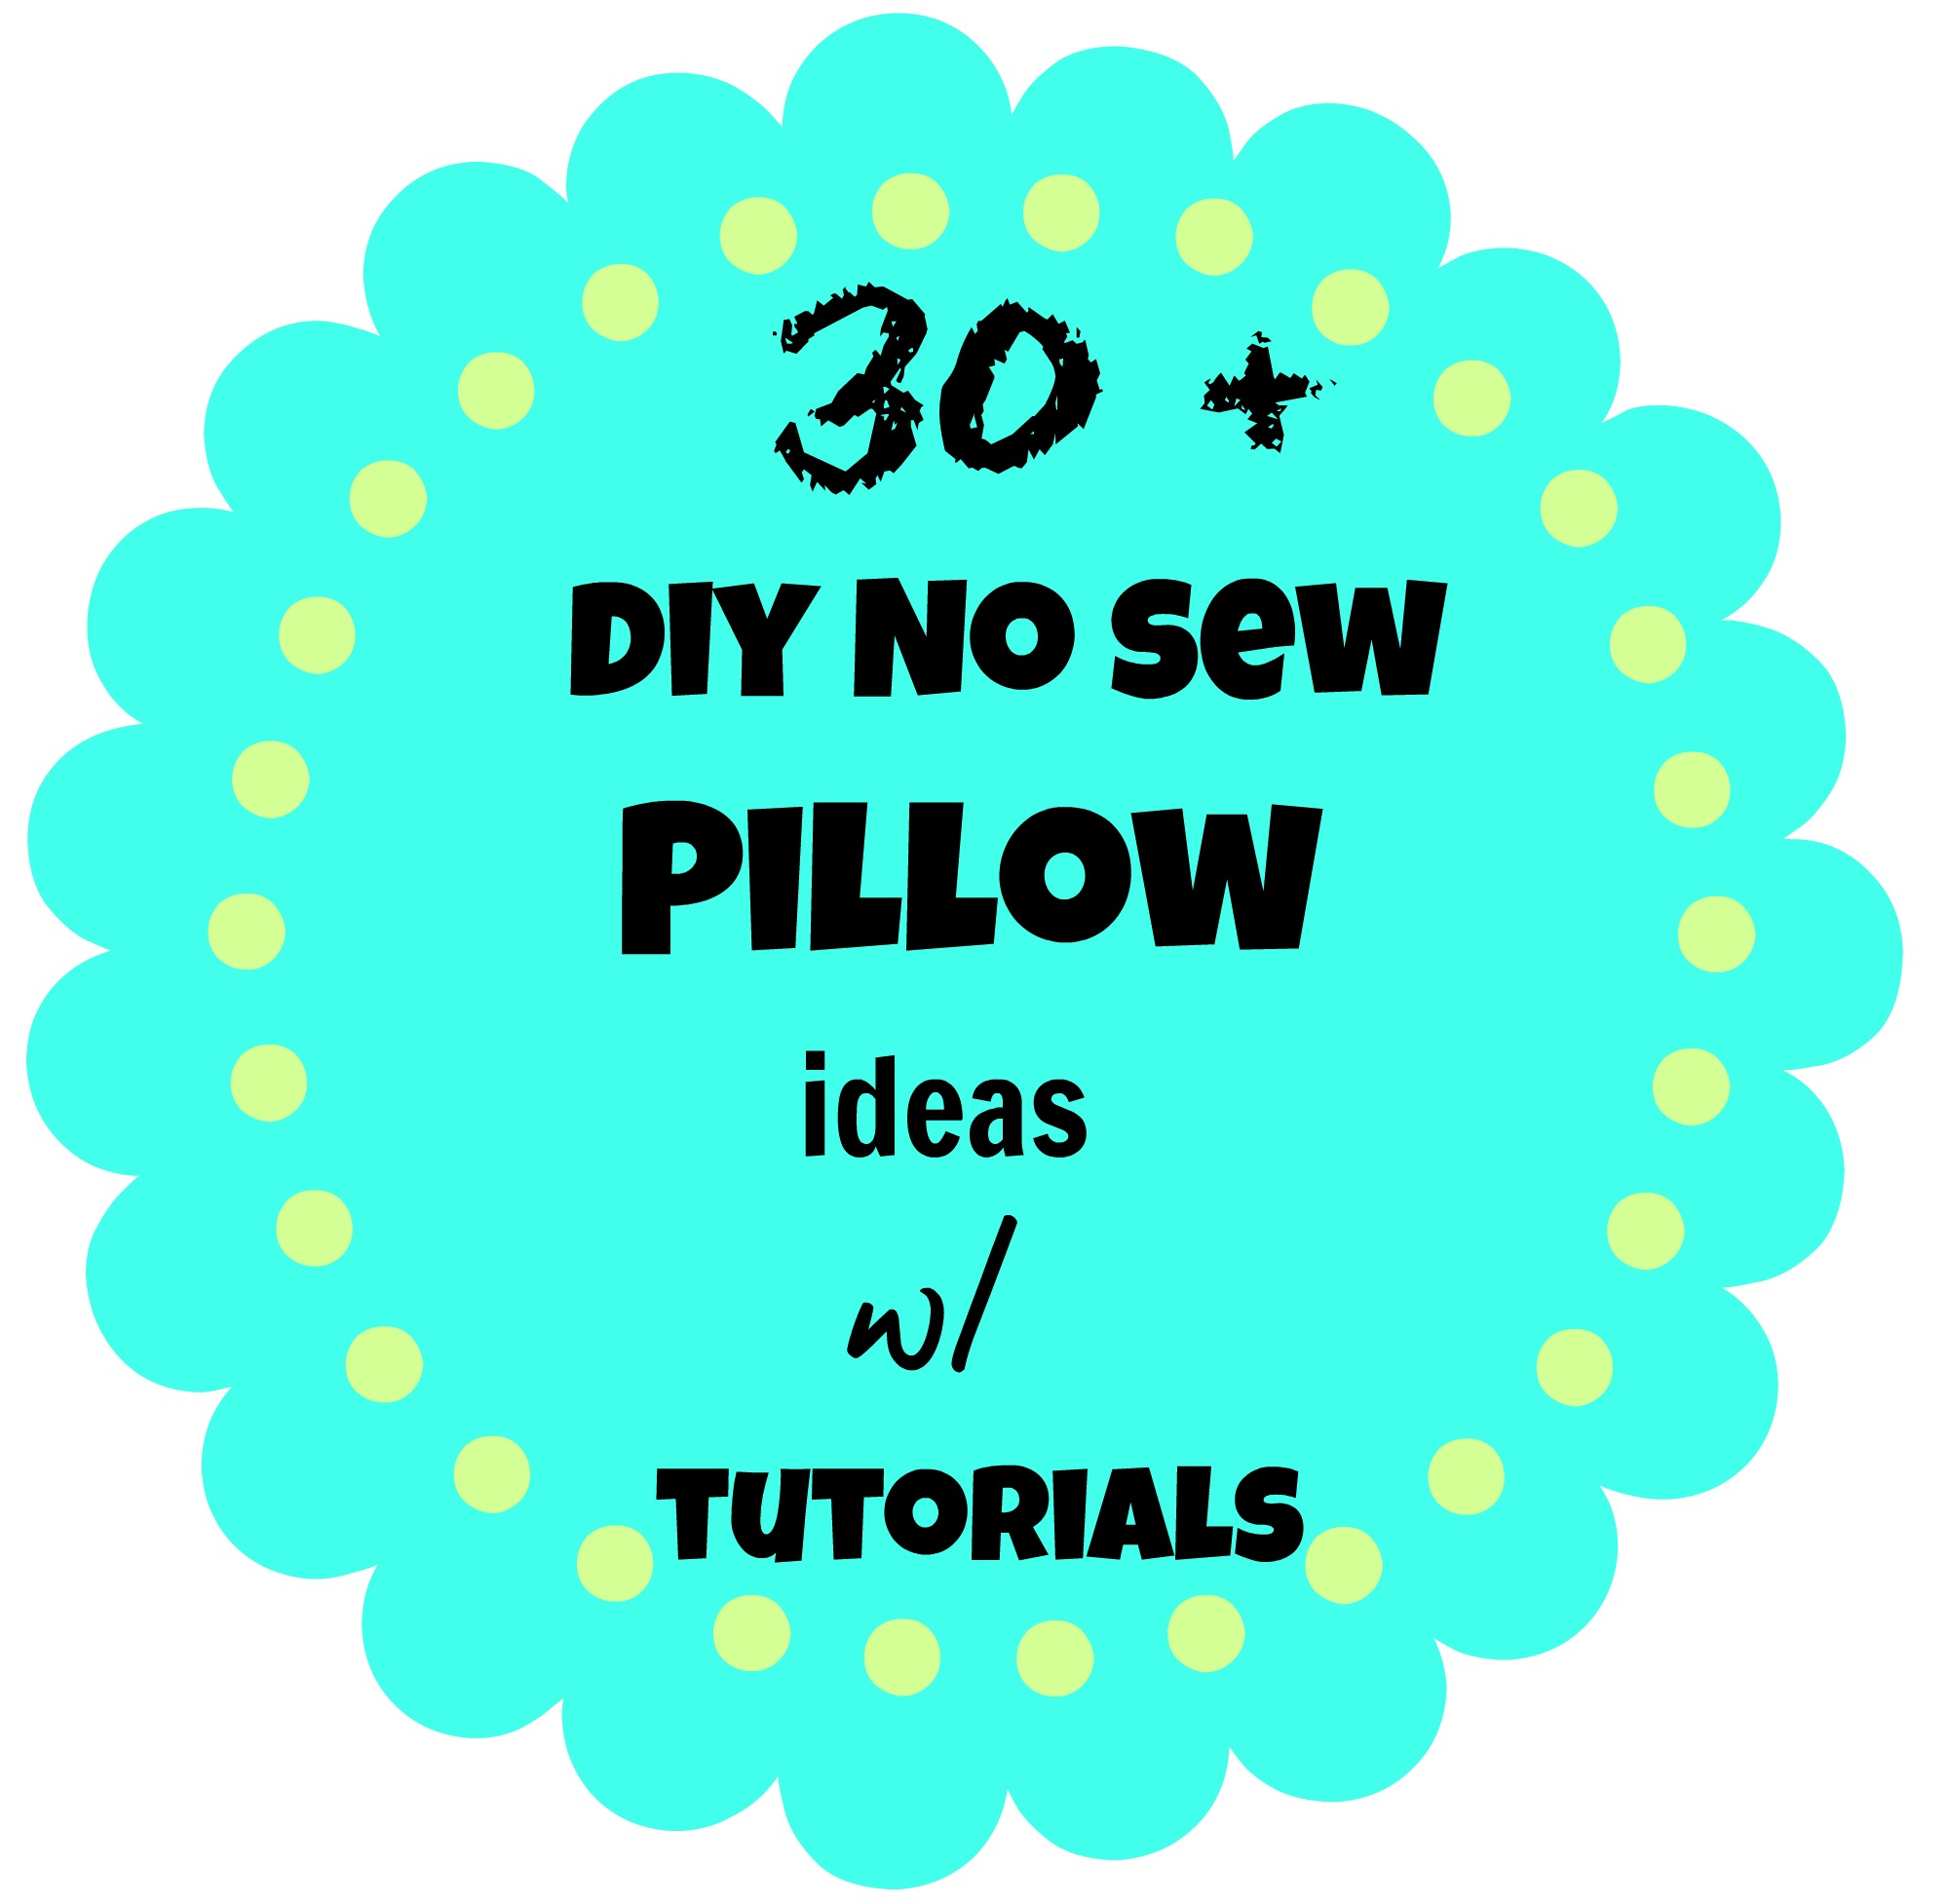 diy pillow pillow sew ideas sew ideas no no